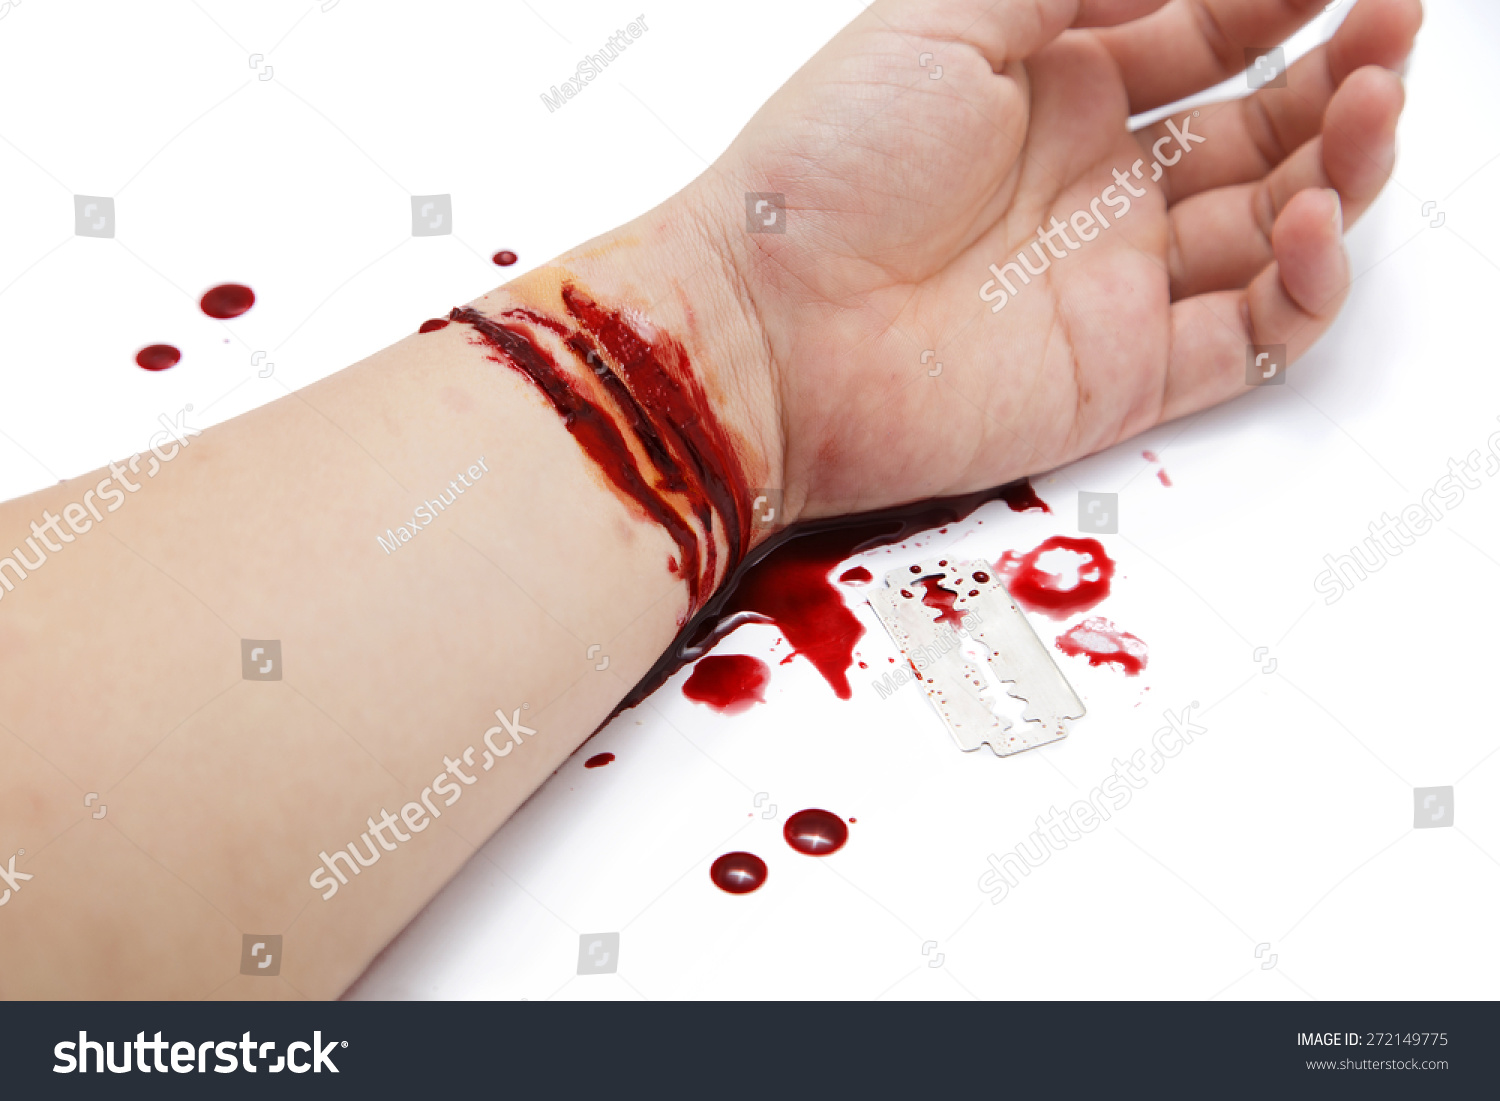 Стоковая фотография 272149775: Hand Full Blood Wrist Cut By Shutterstock.